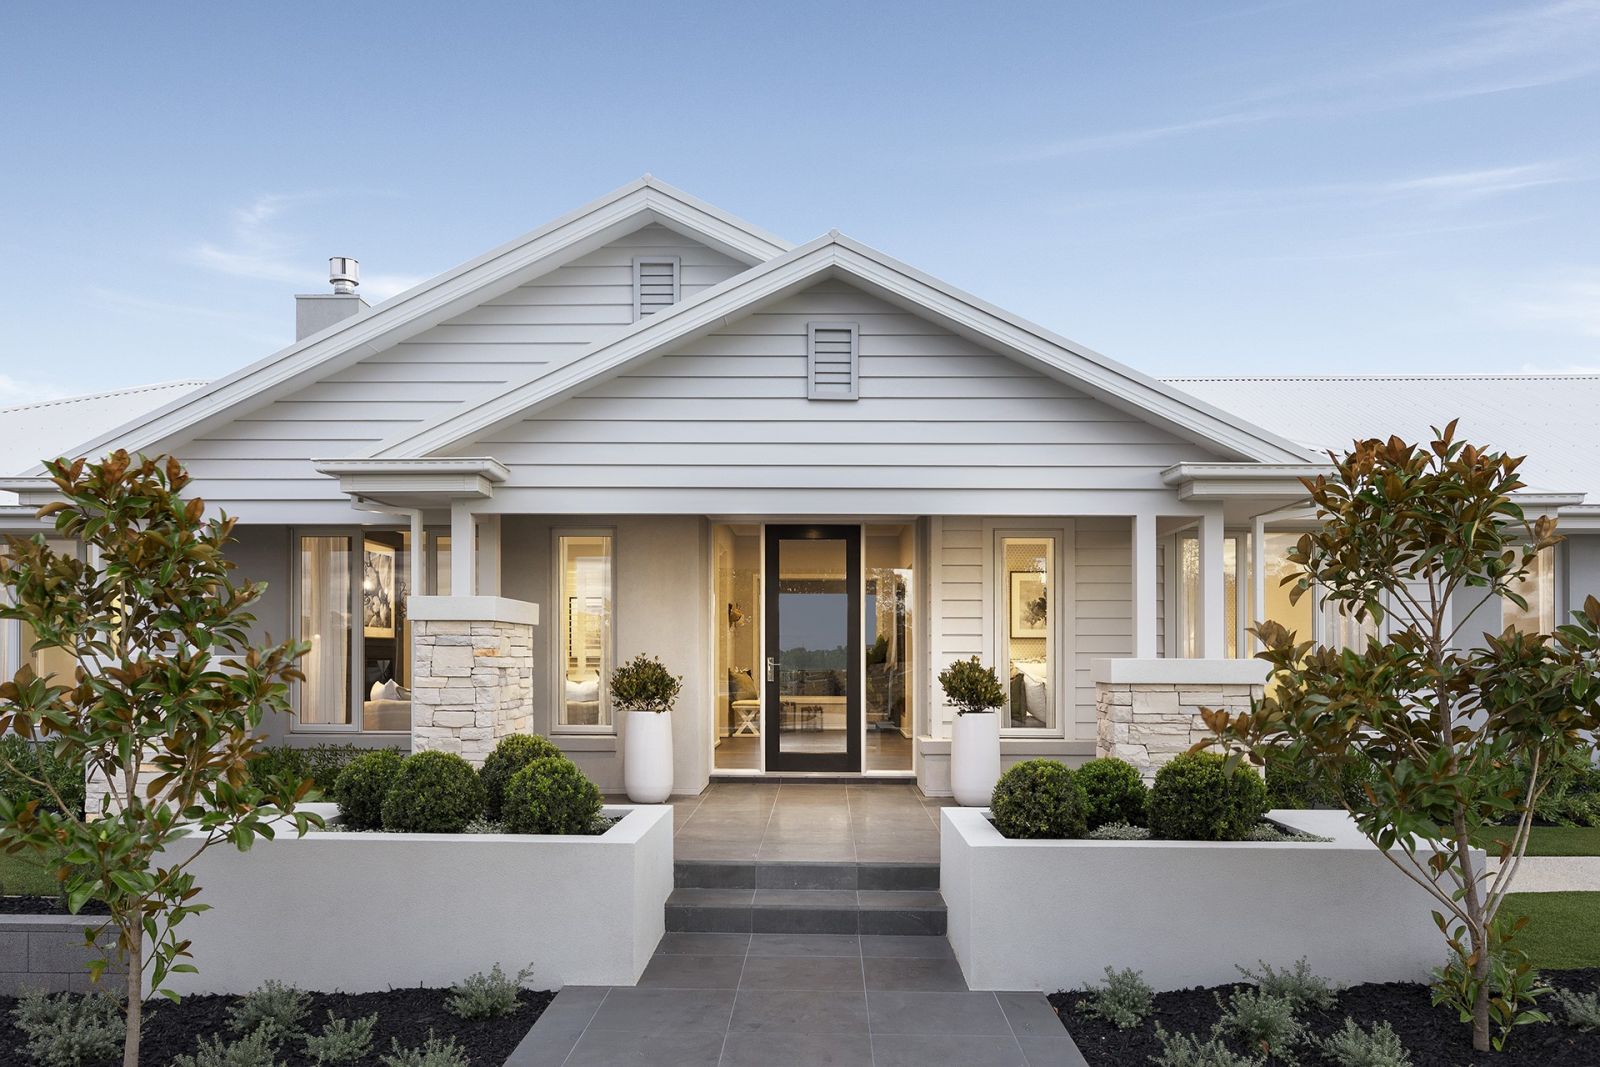 modern country interior design home hamptons style facade by metricon homes